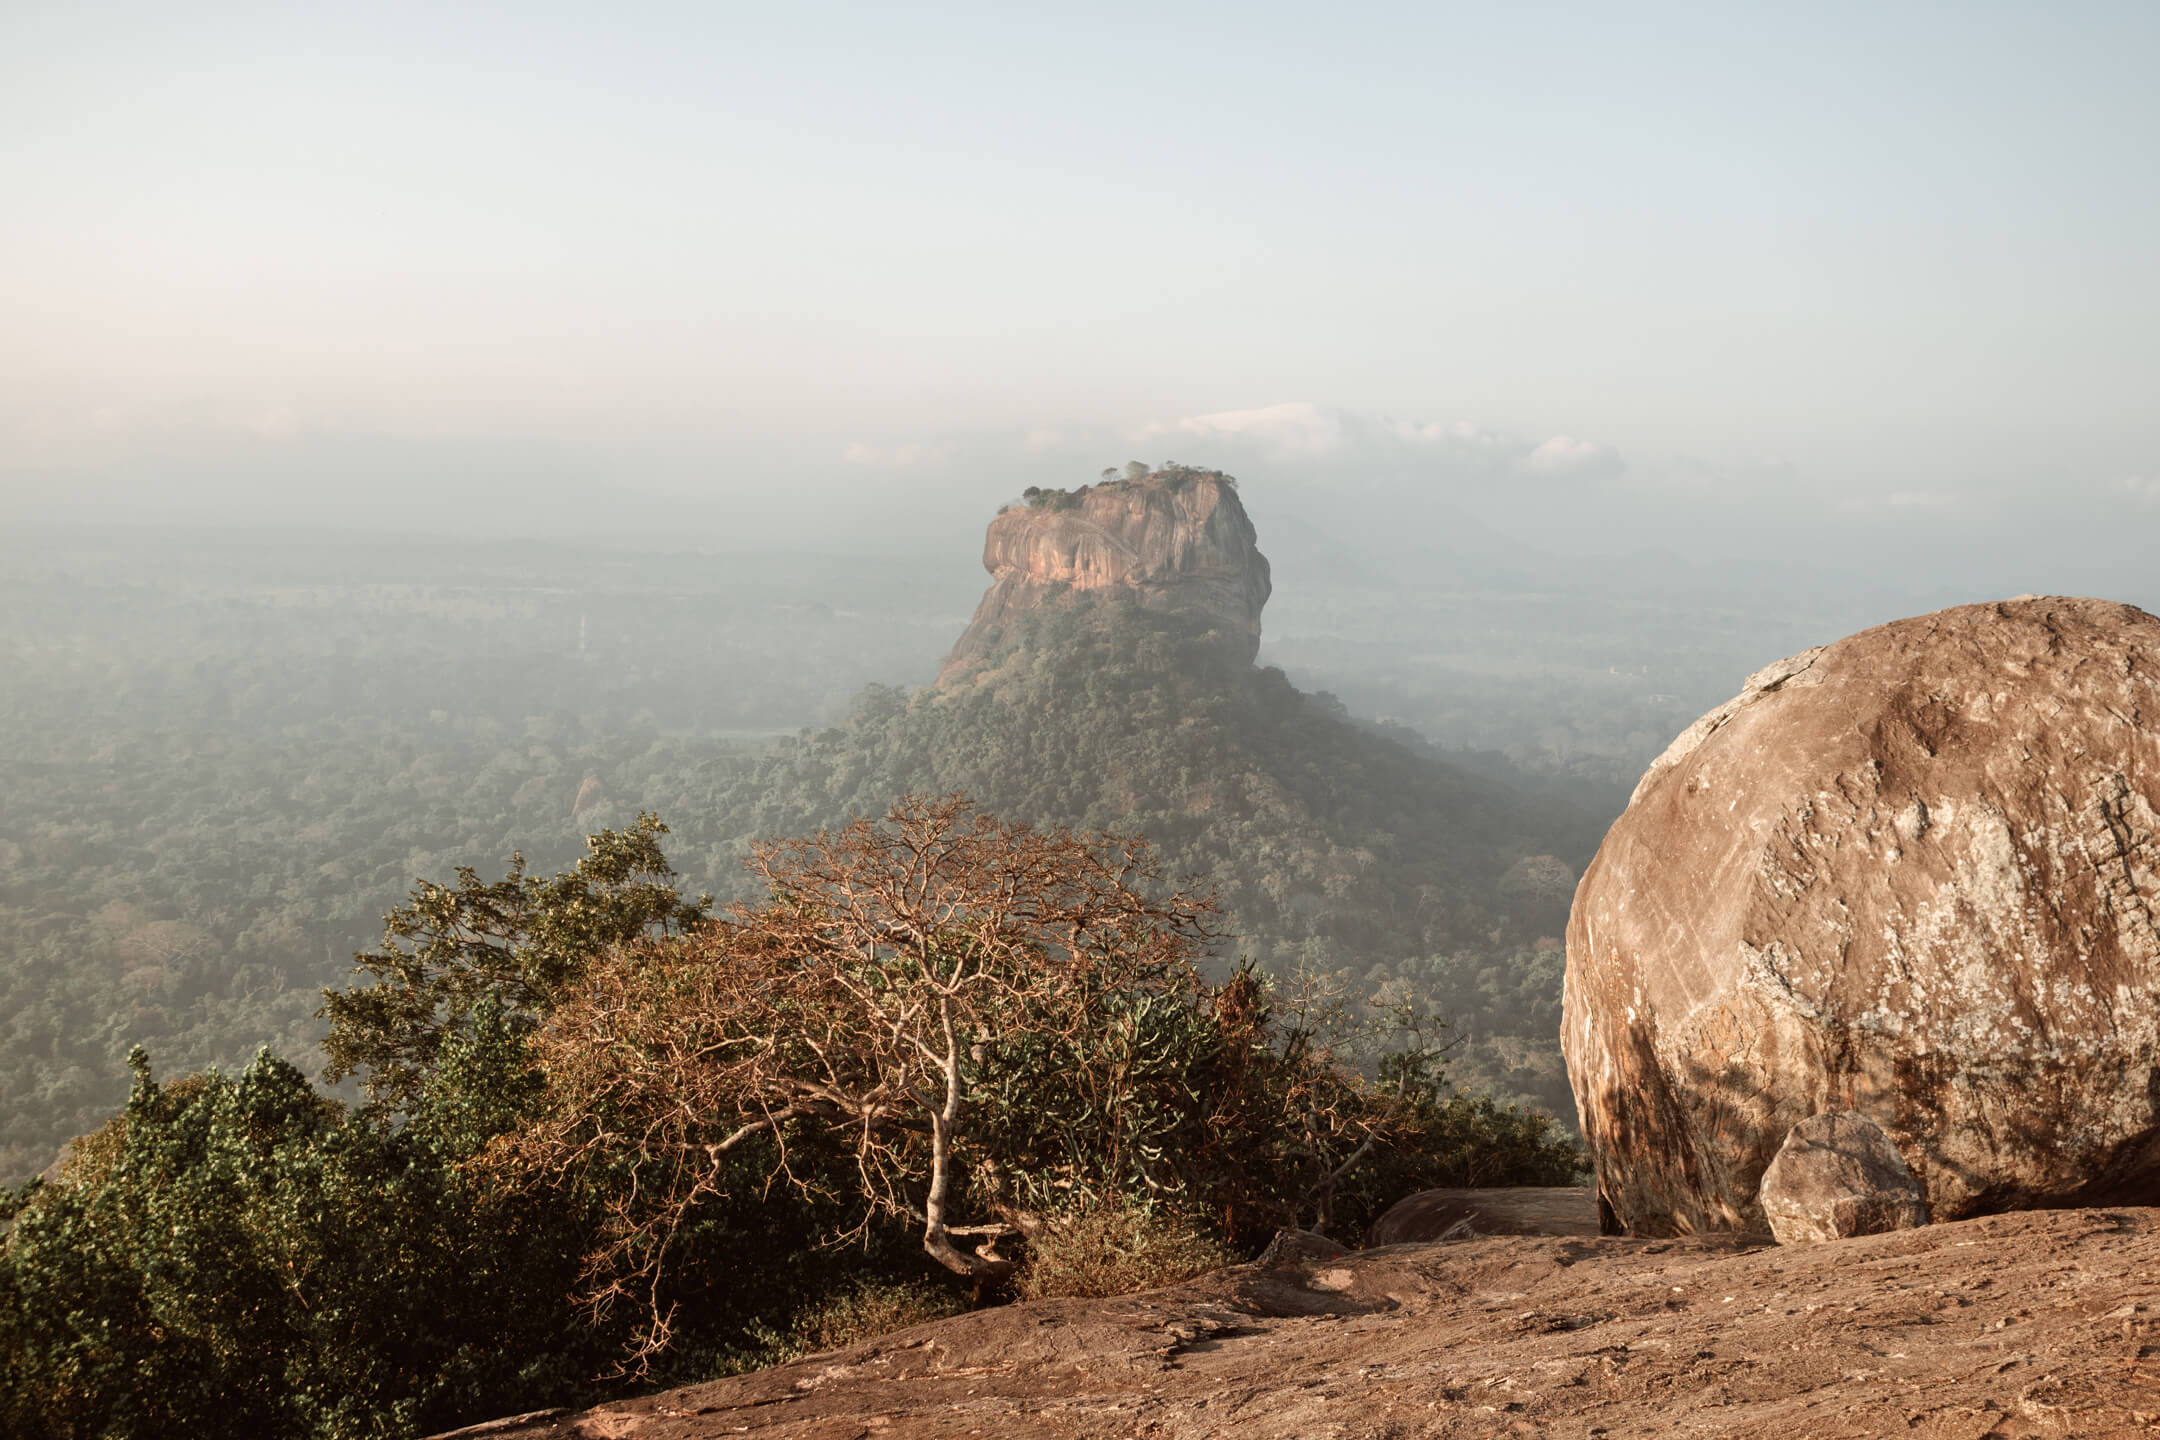 The increPidurangala Rock in Sigiriya, Sri Lanka